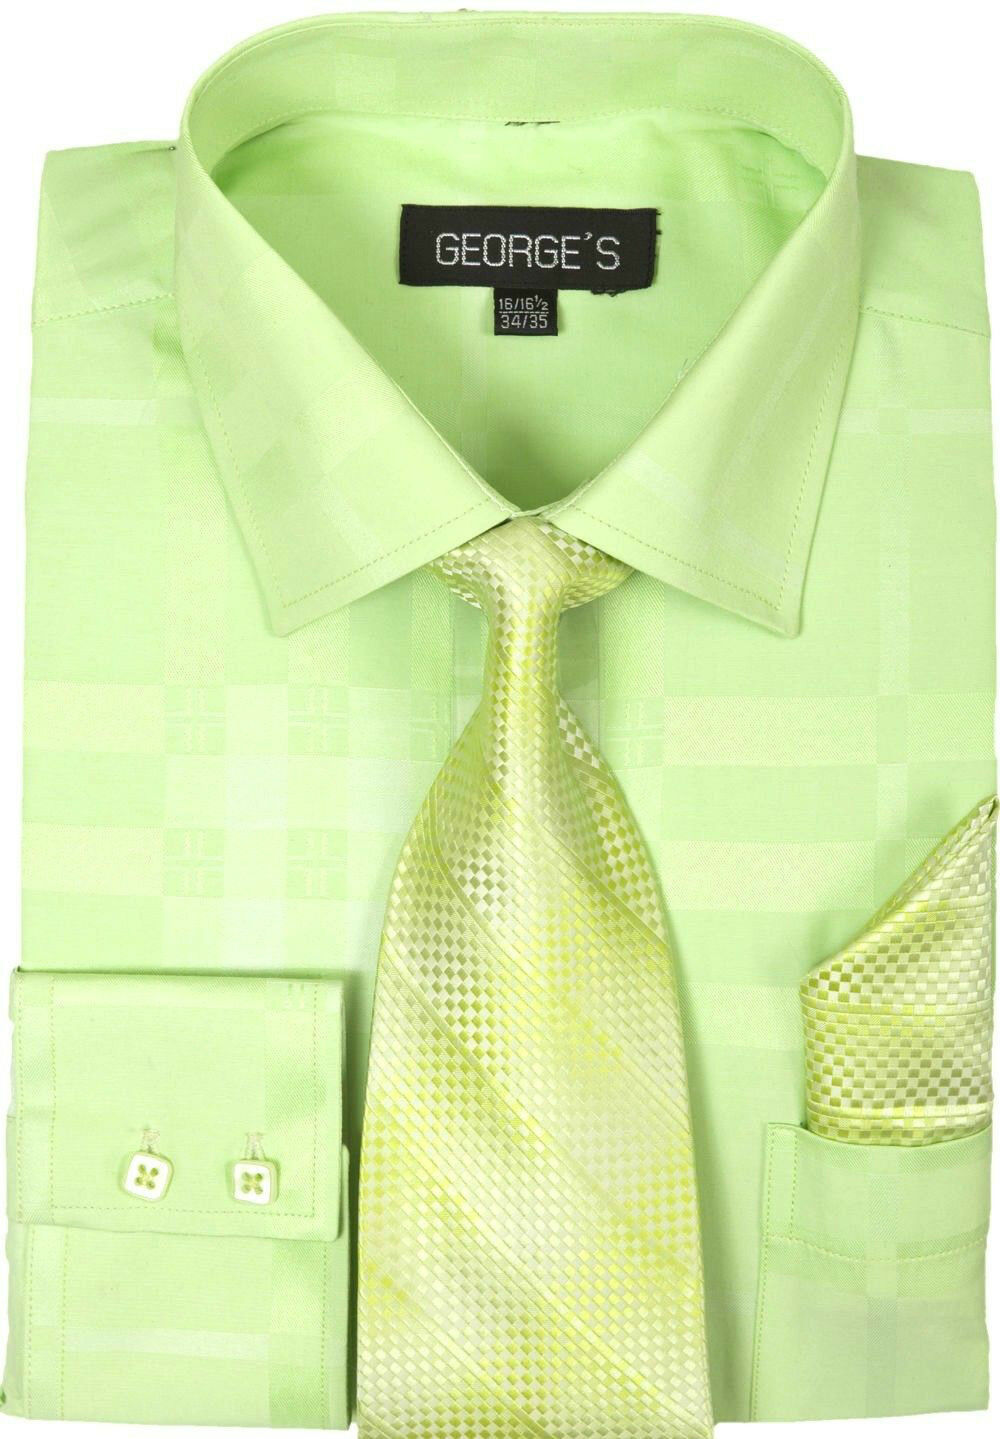 Milano Moda Men Shirt AH623-Lime - Church Suits For Less